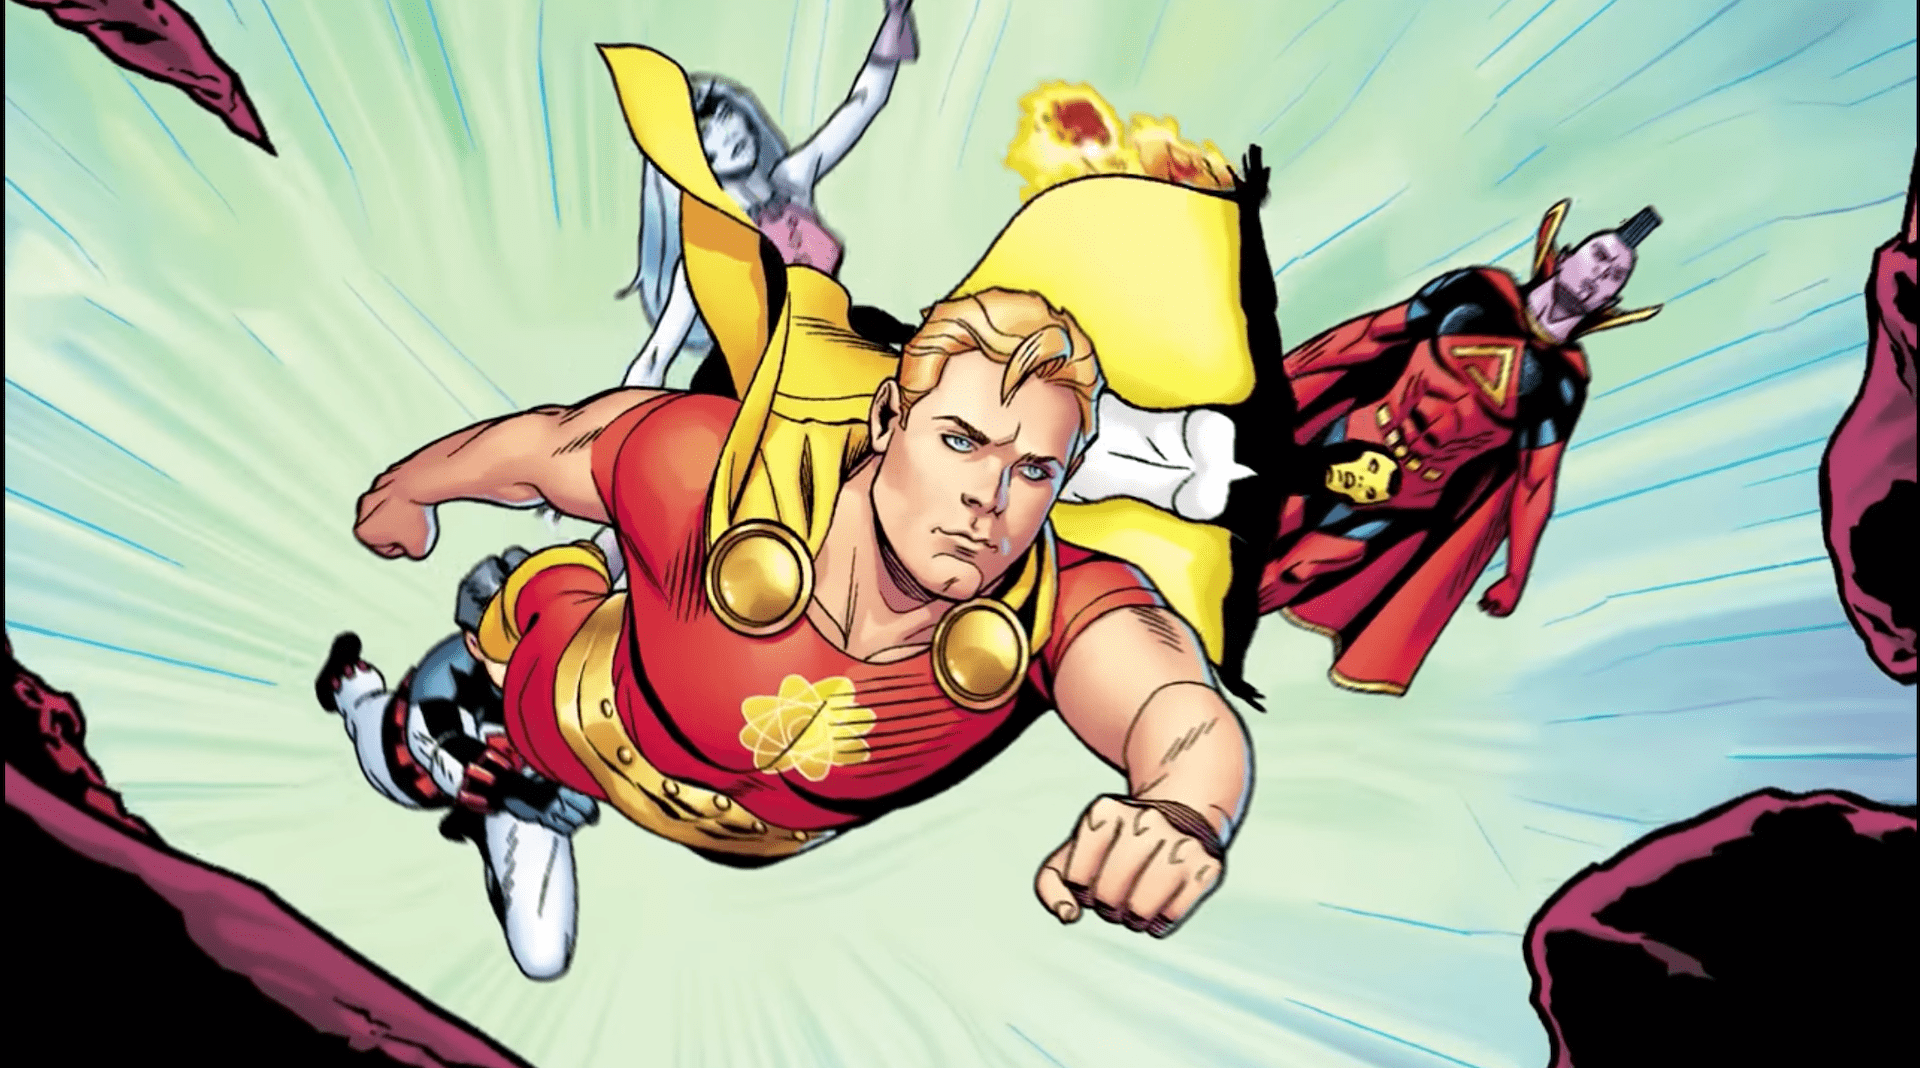 Marvel Comics drops 'Heroes Reborn' trailer ahead of its May 5 release